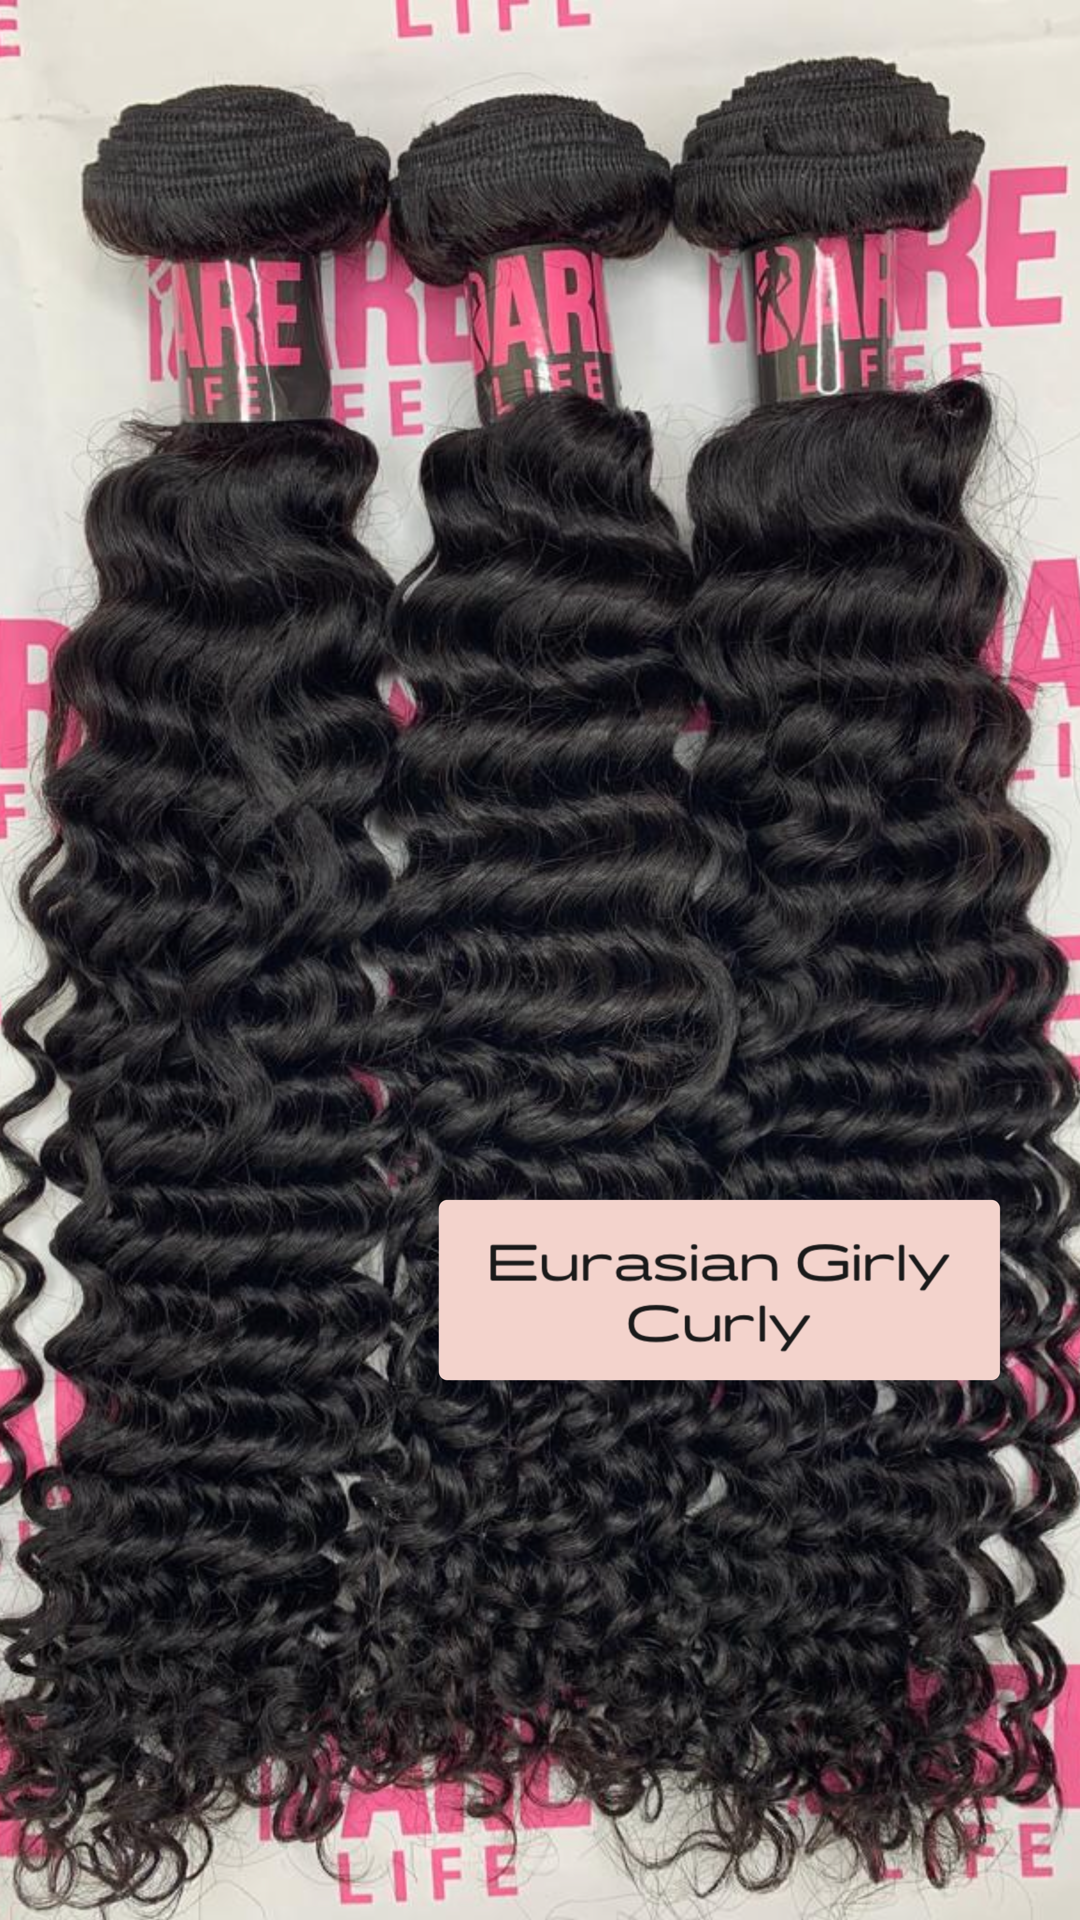 Eurasian Girly Curly BUNDLE DEALS